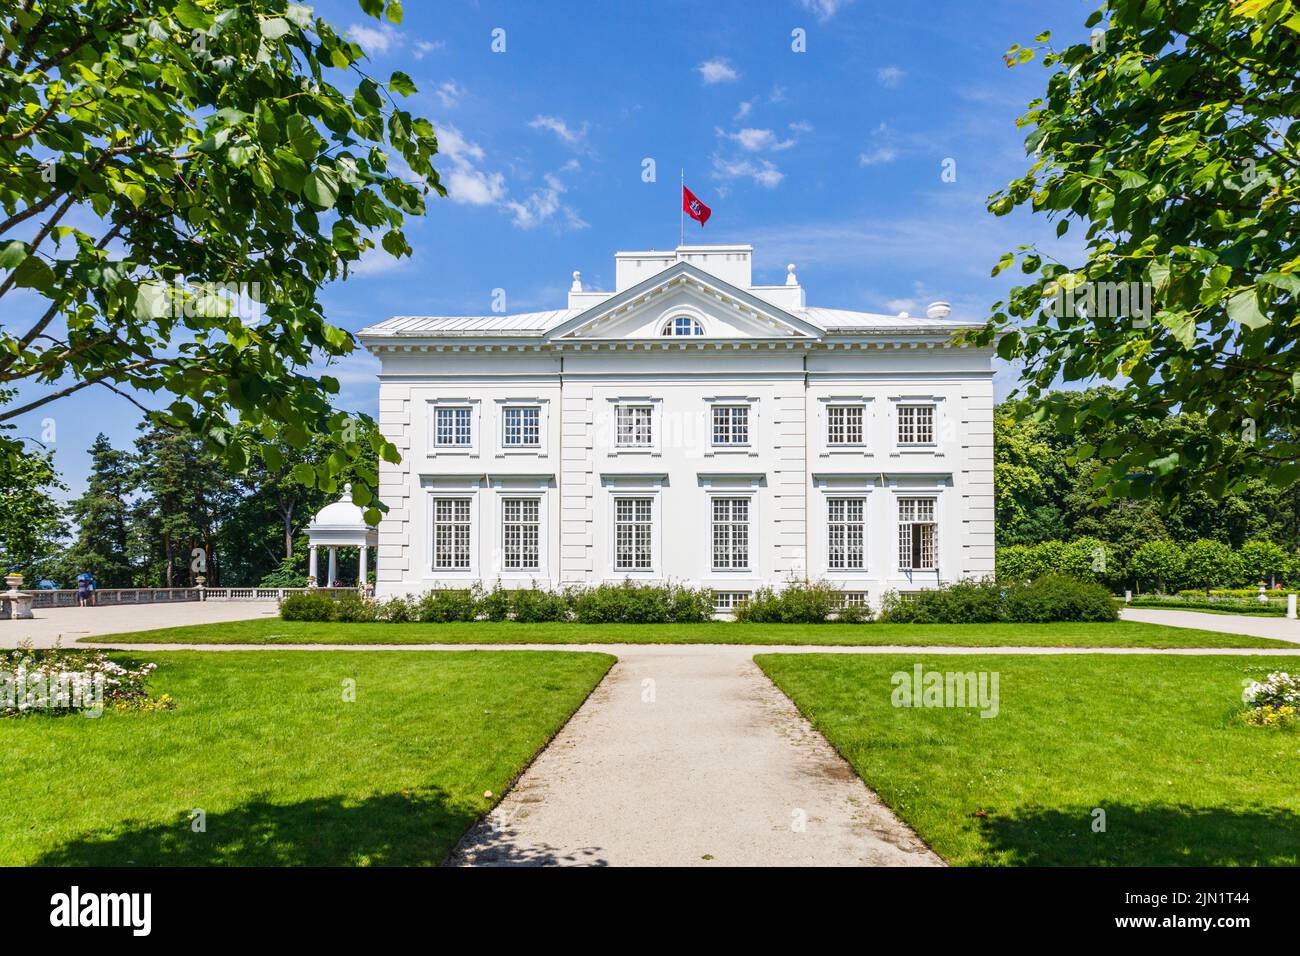 Uzutrakis manor. Colonnaded mansion set in landscaped gardens. Trakai, Lithuania, 2 July 2022 Stock Photo